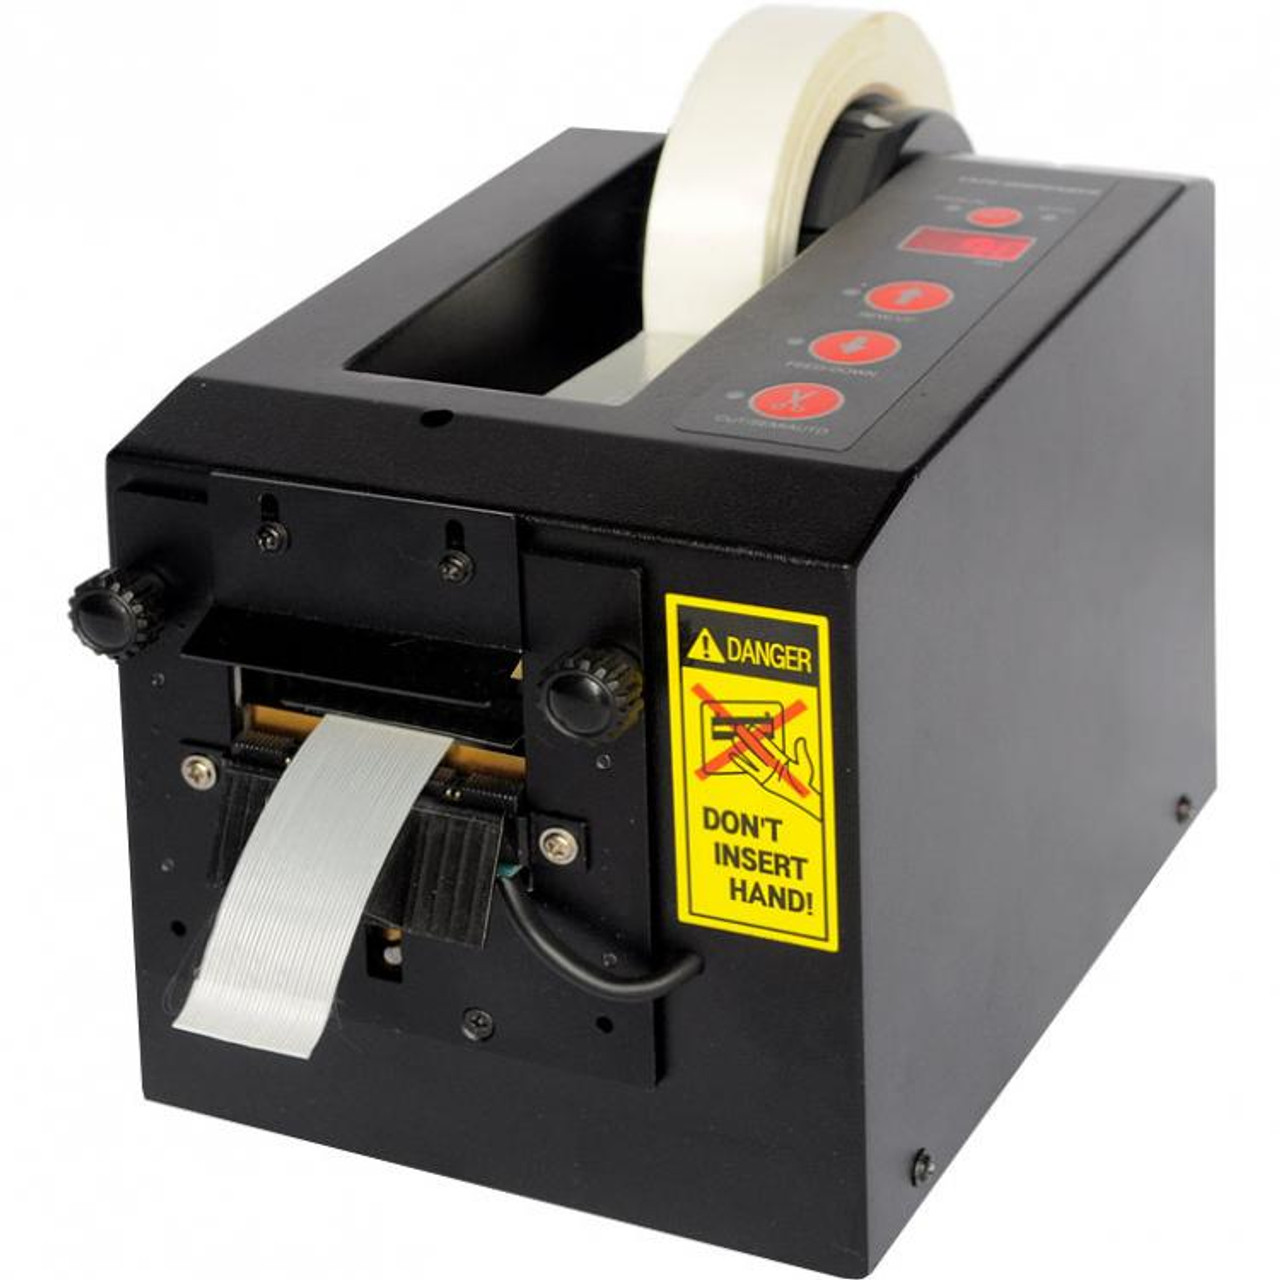 automatically tape dispenser 80mm width film